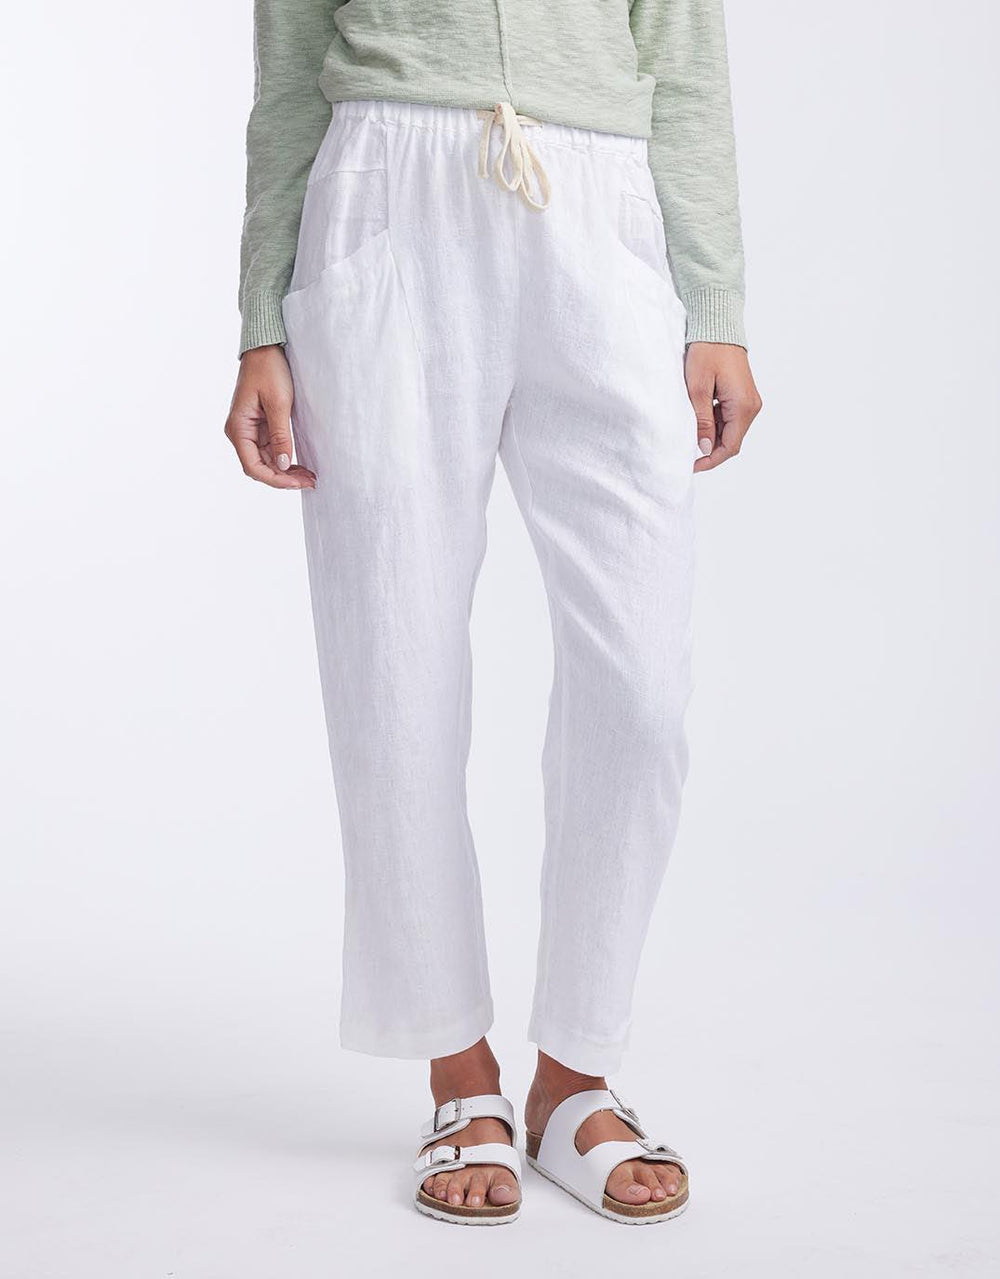 Buy Luxe Linen Pants - White Little Lies for Sale Online Australia